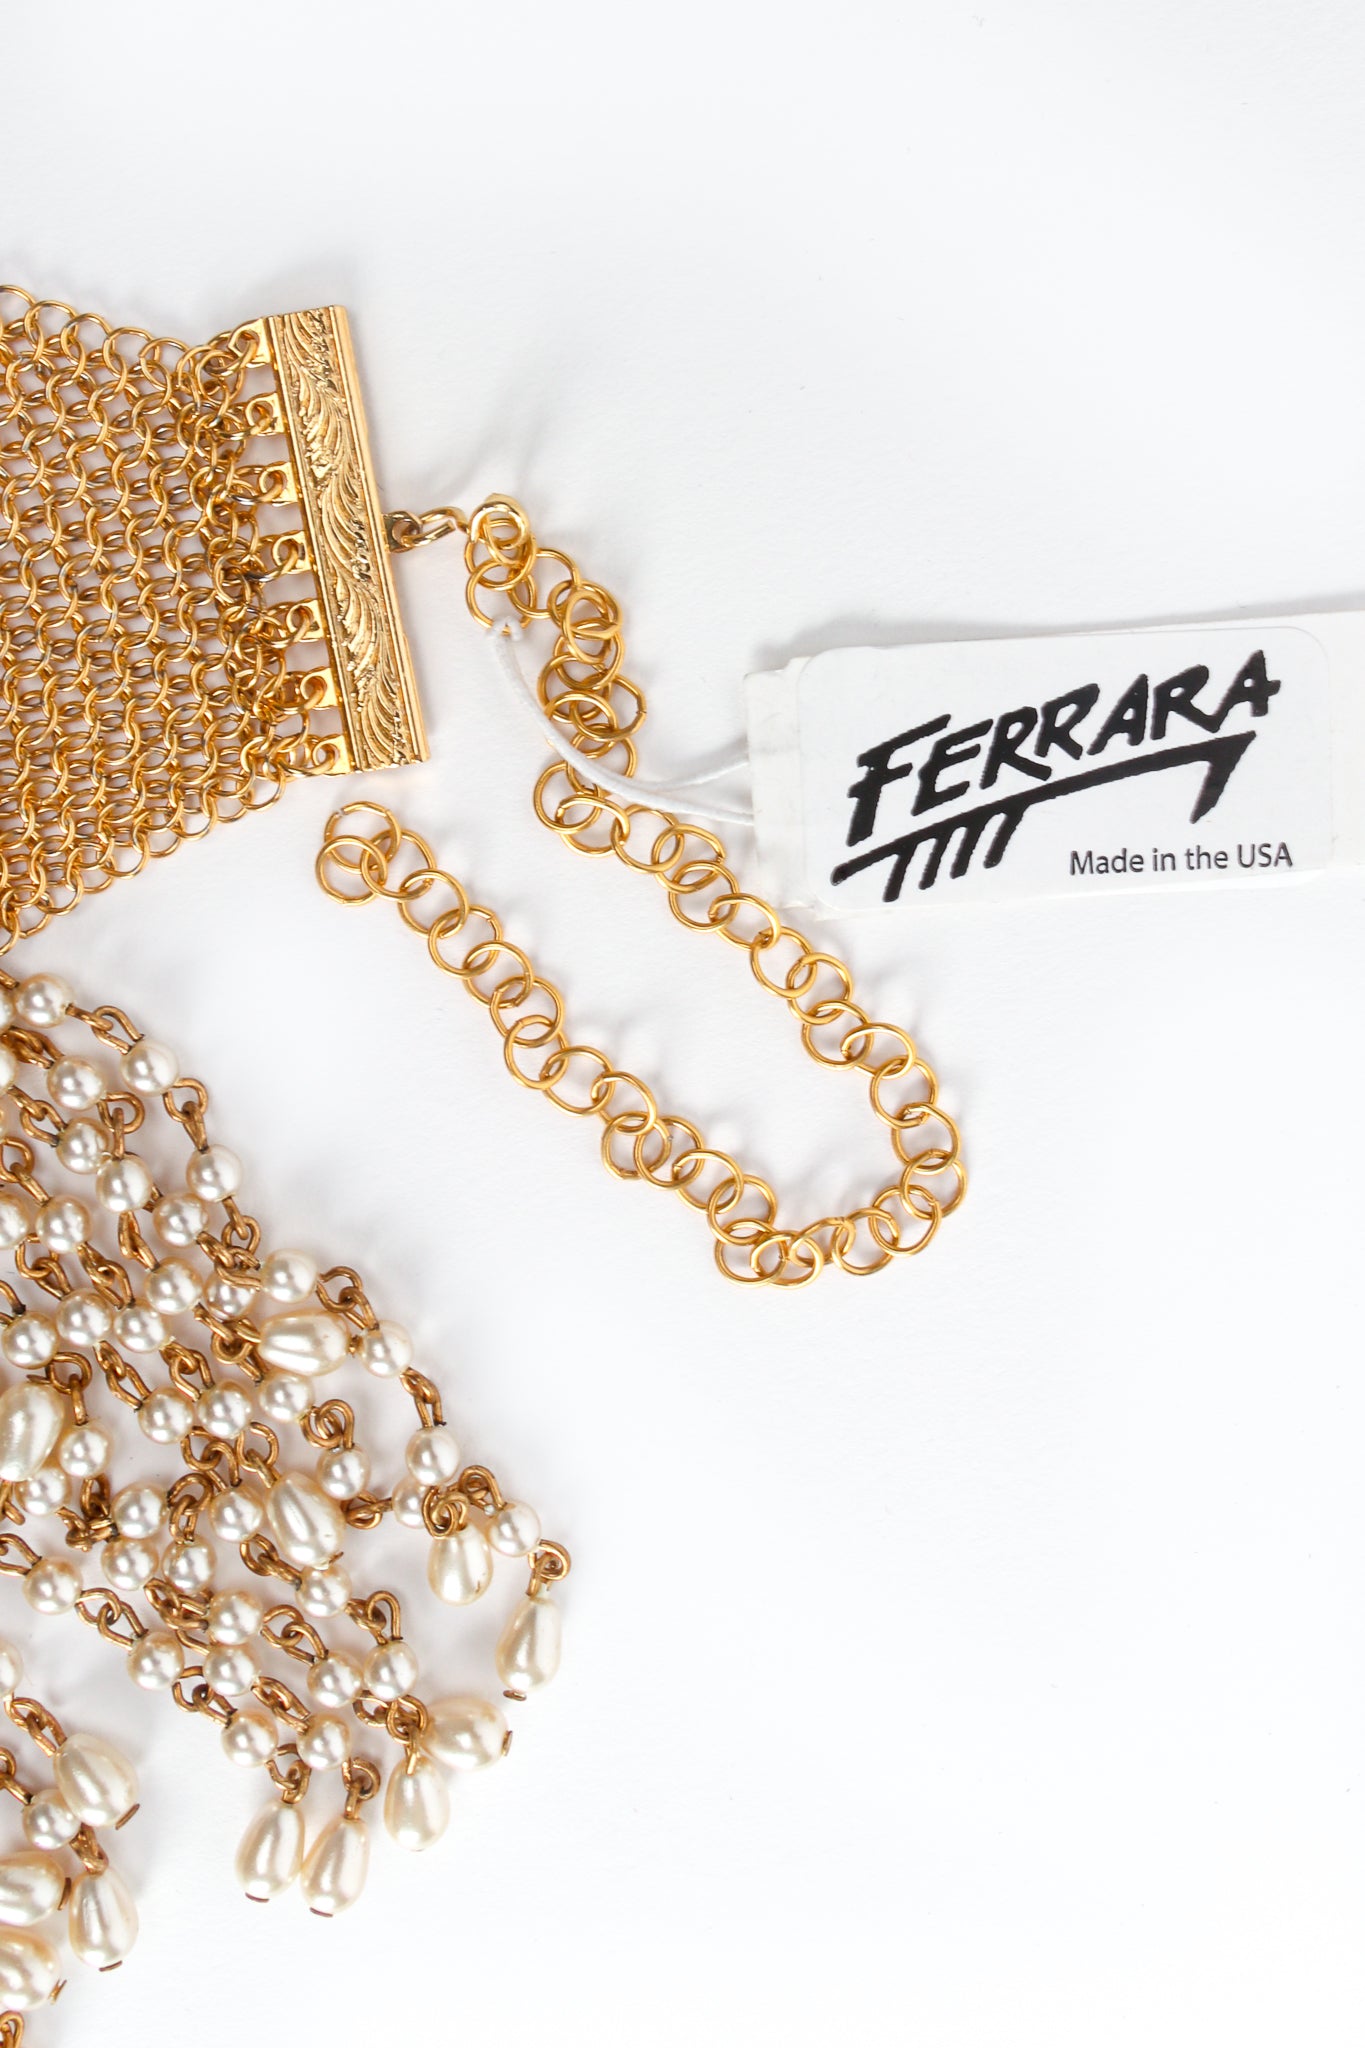 Vintage Anthony Ferrara Plated Ring Mesh Swarovski Pearl Fringe Bib Necklace Hang Tag at Recess LA